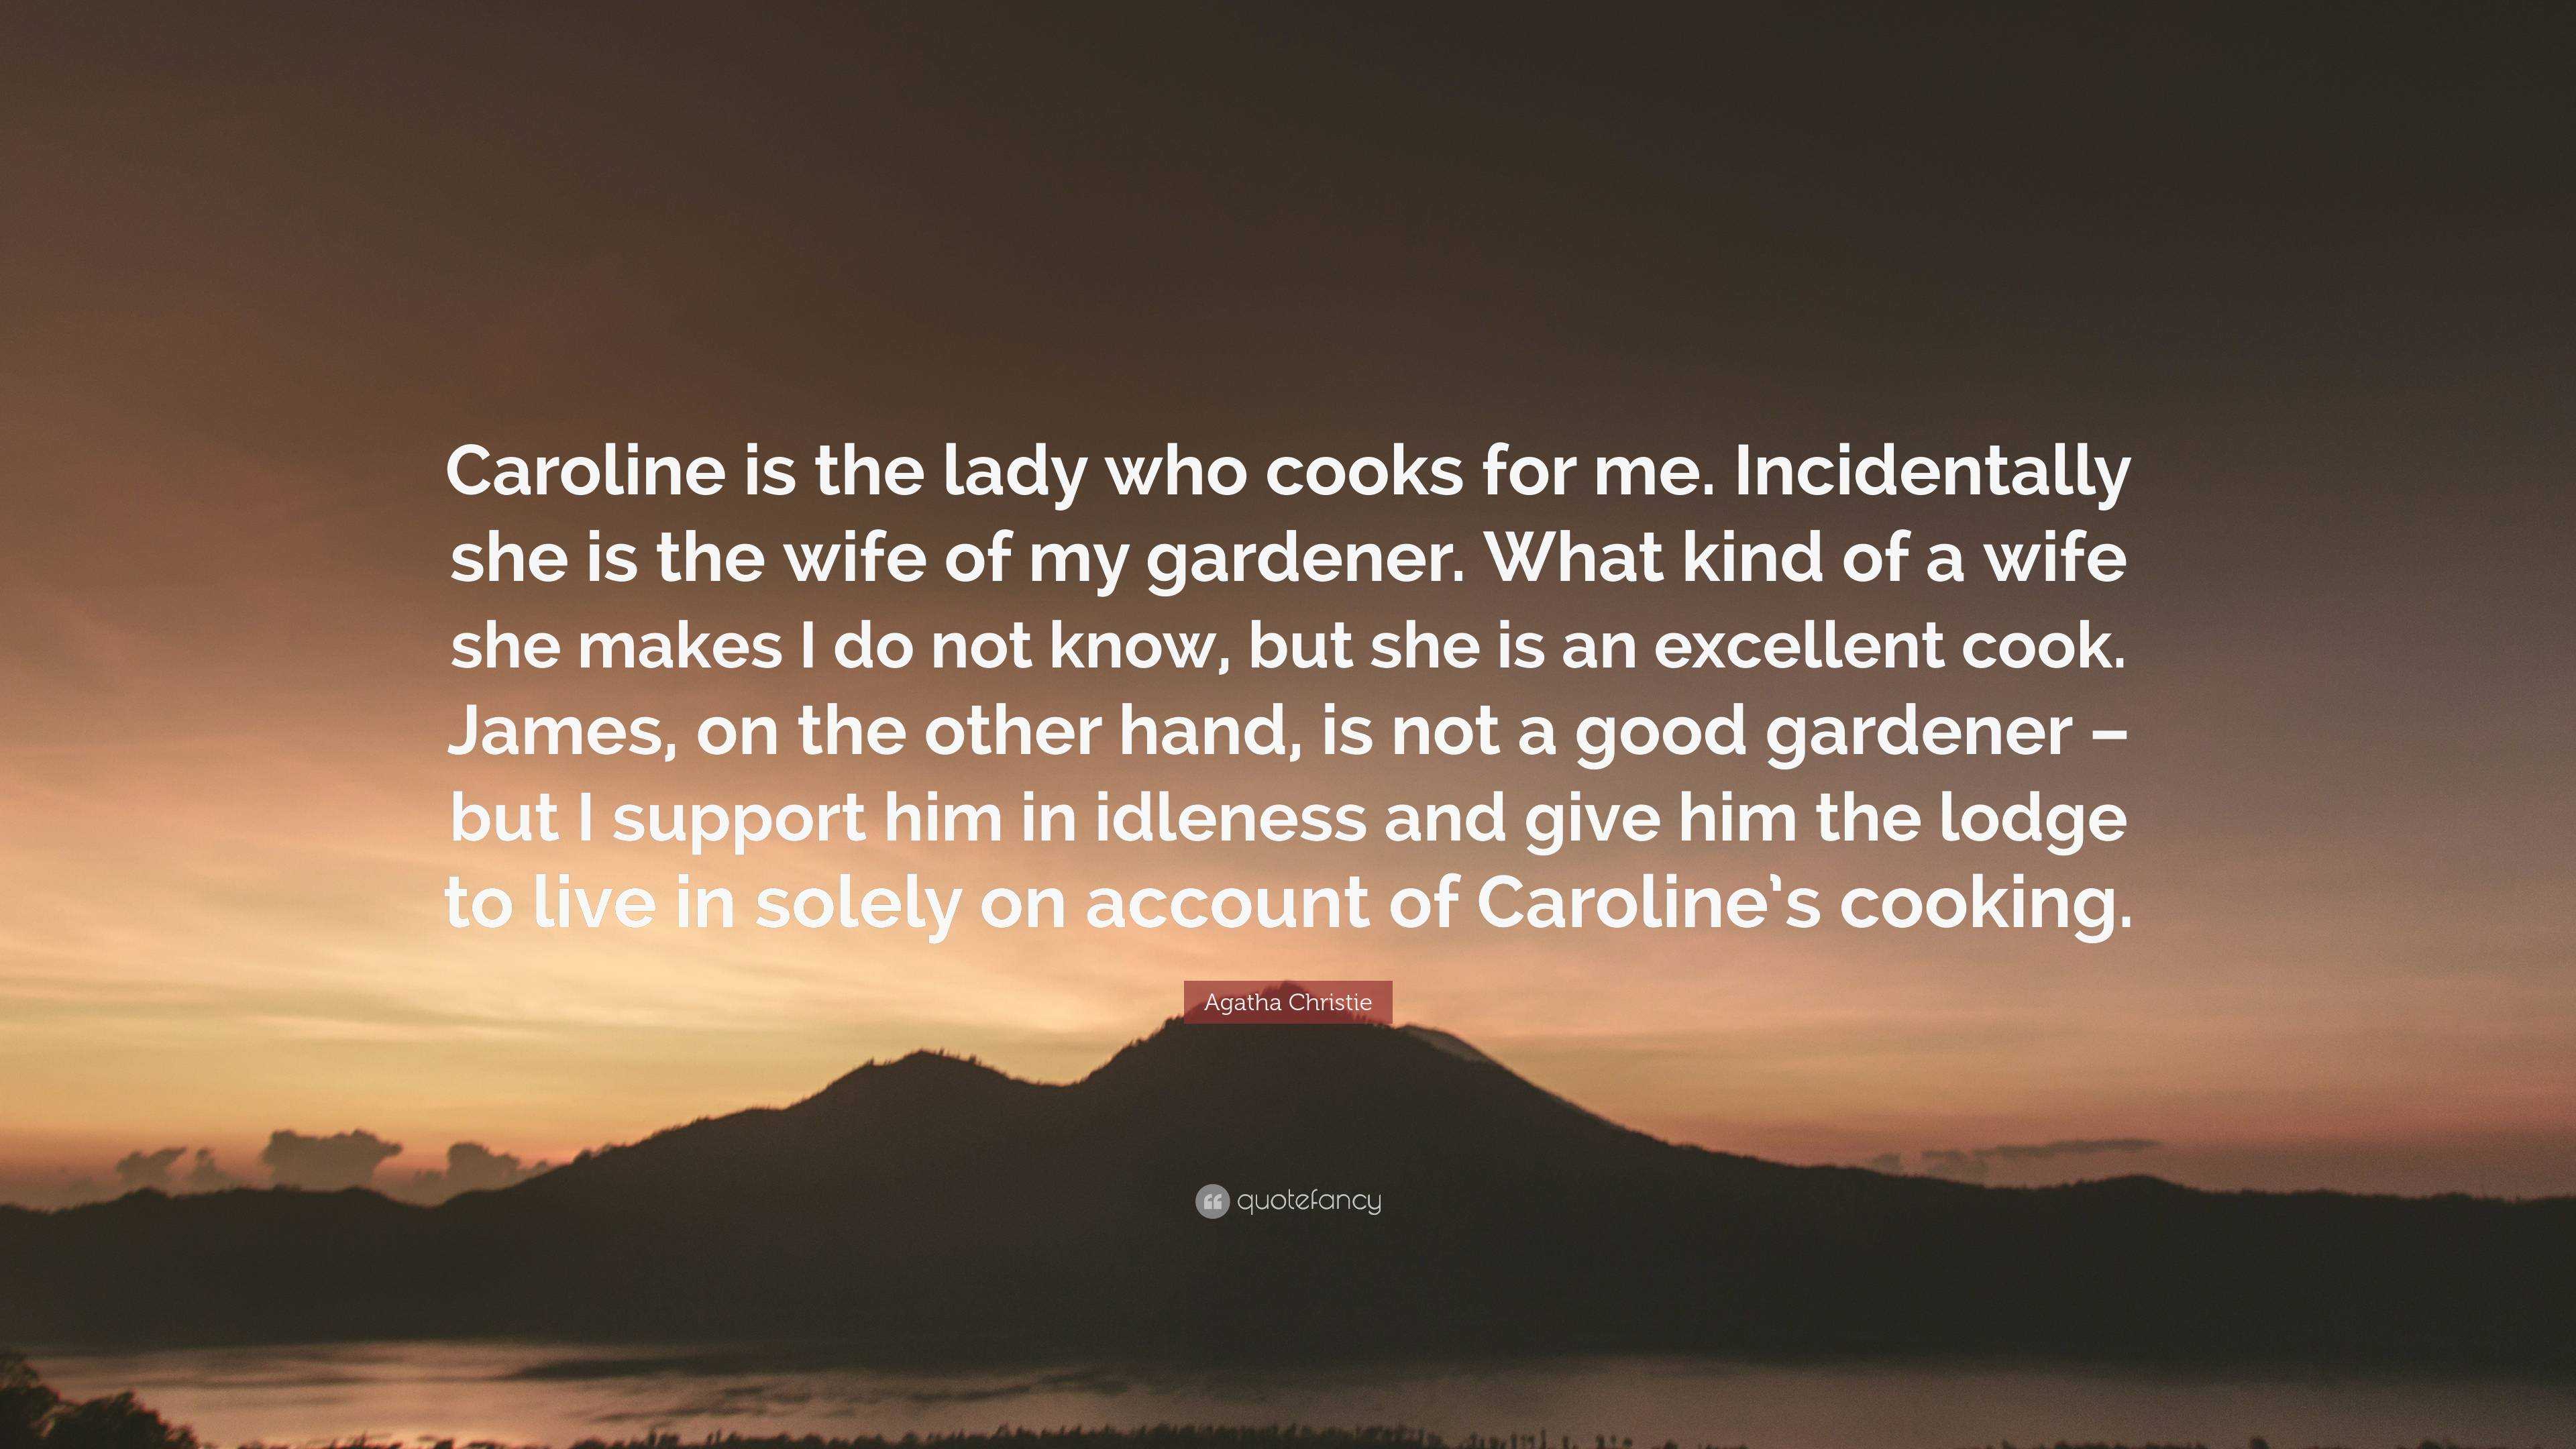 Agatha Christie Quote “Caroline is the